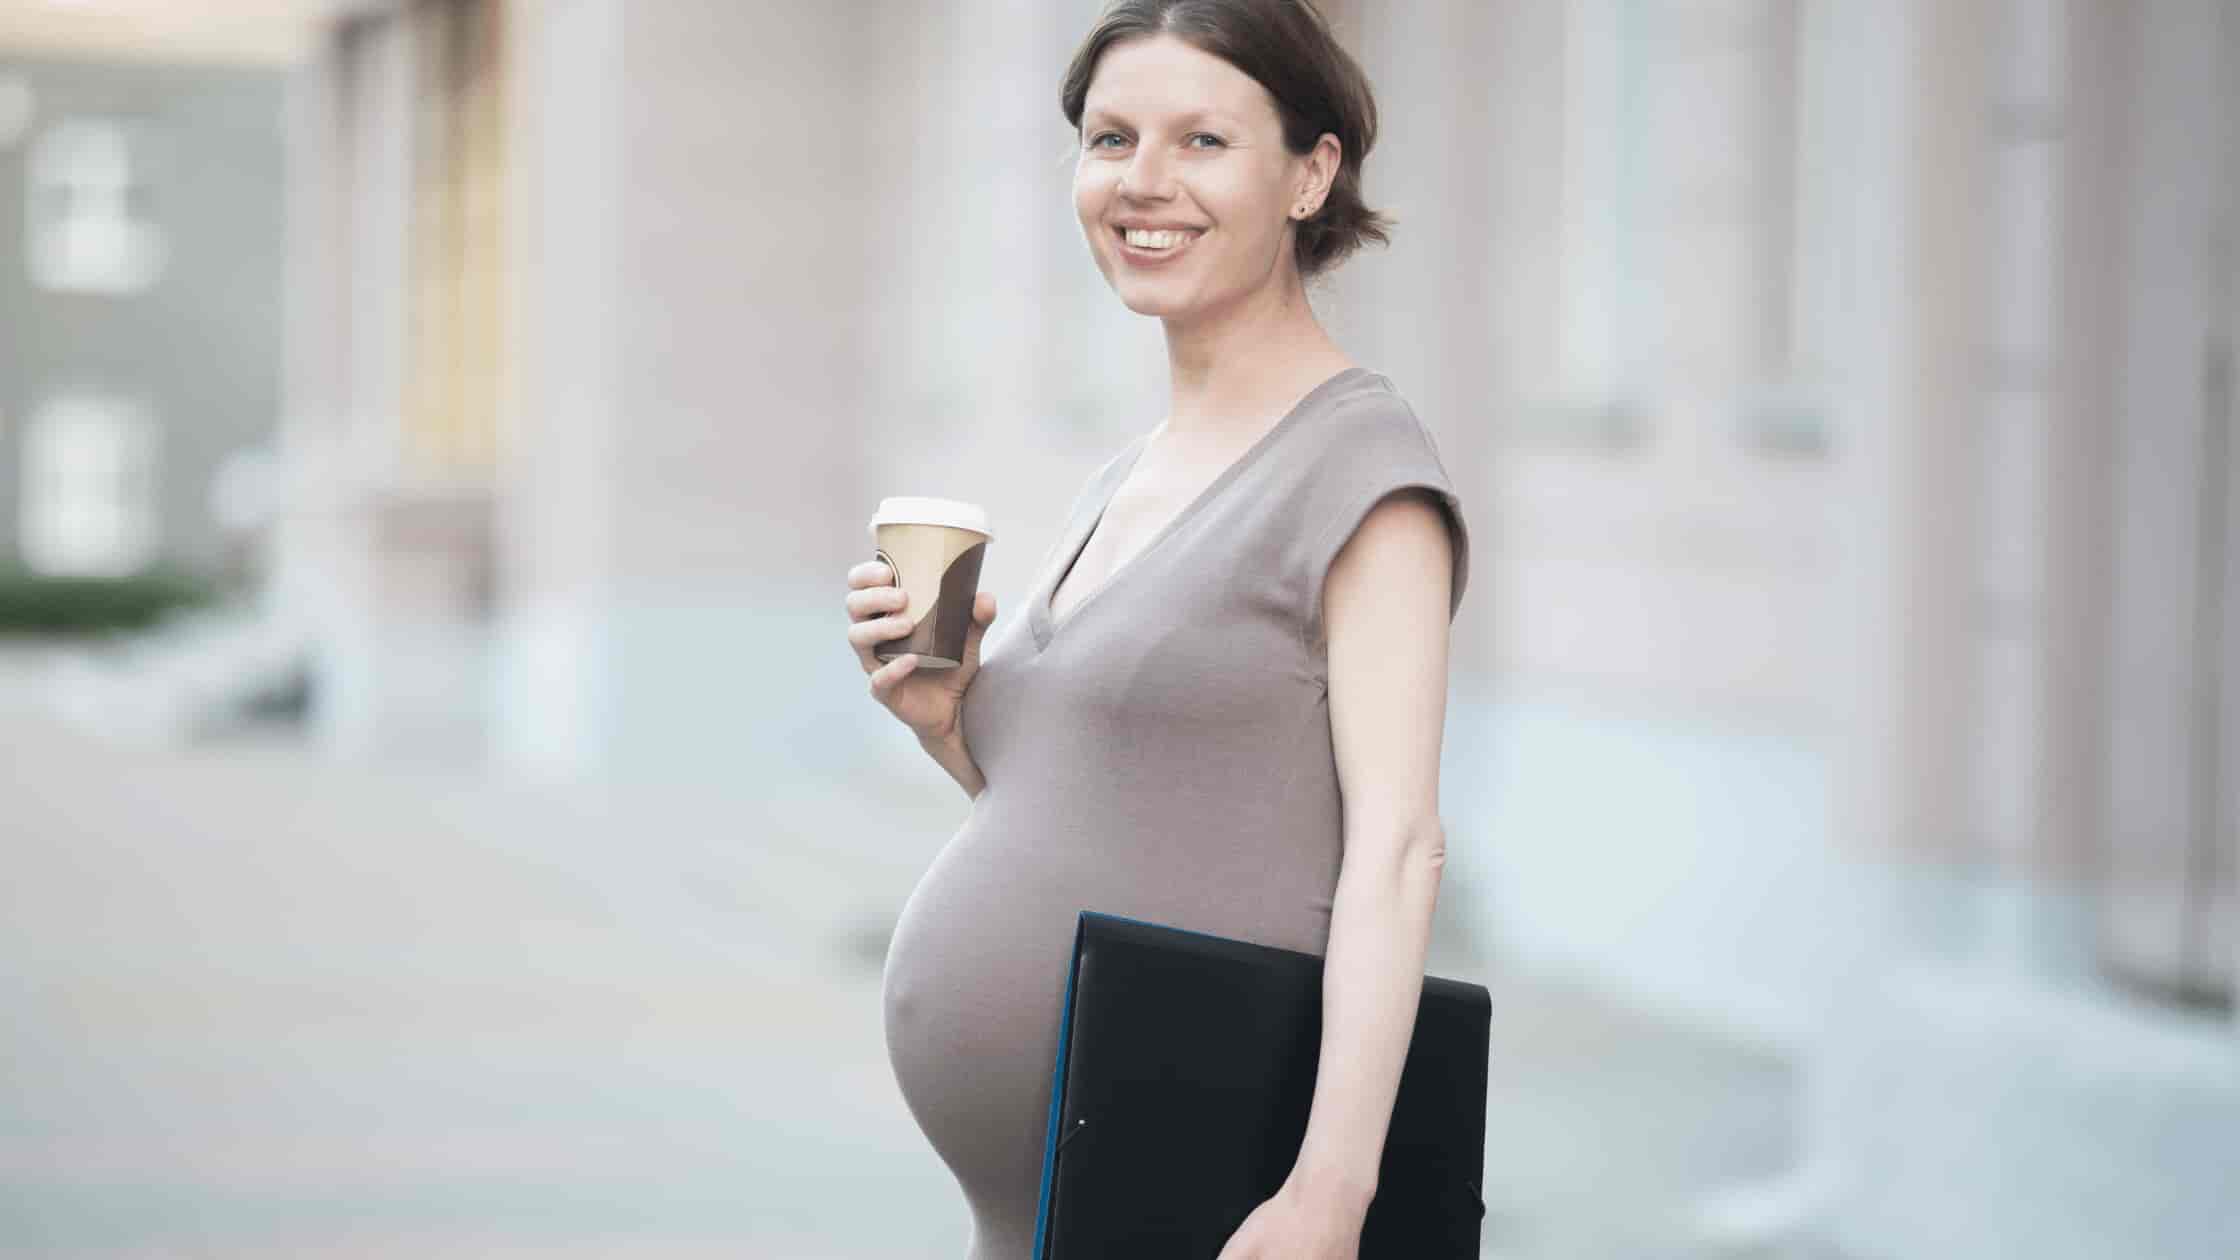 Pregnancy Discrimination in Job Interviews